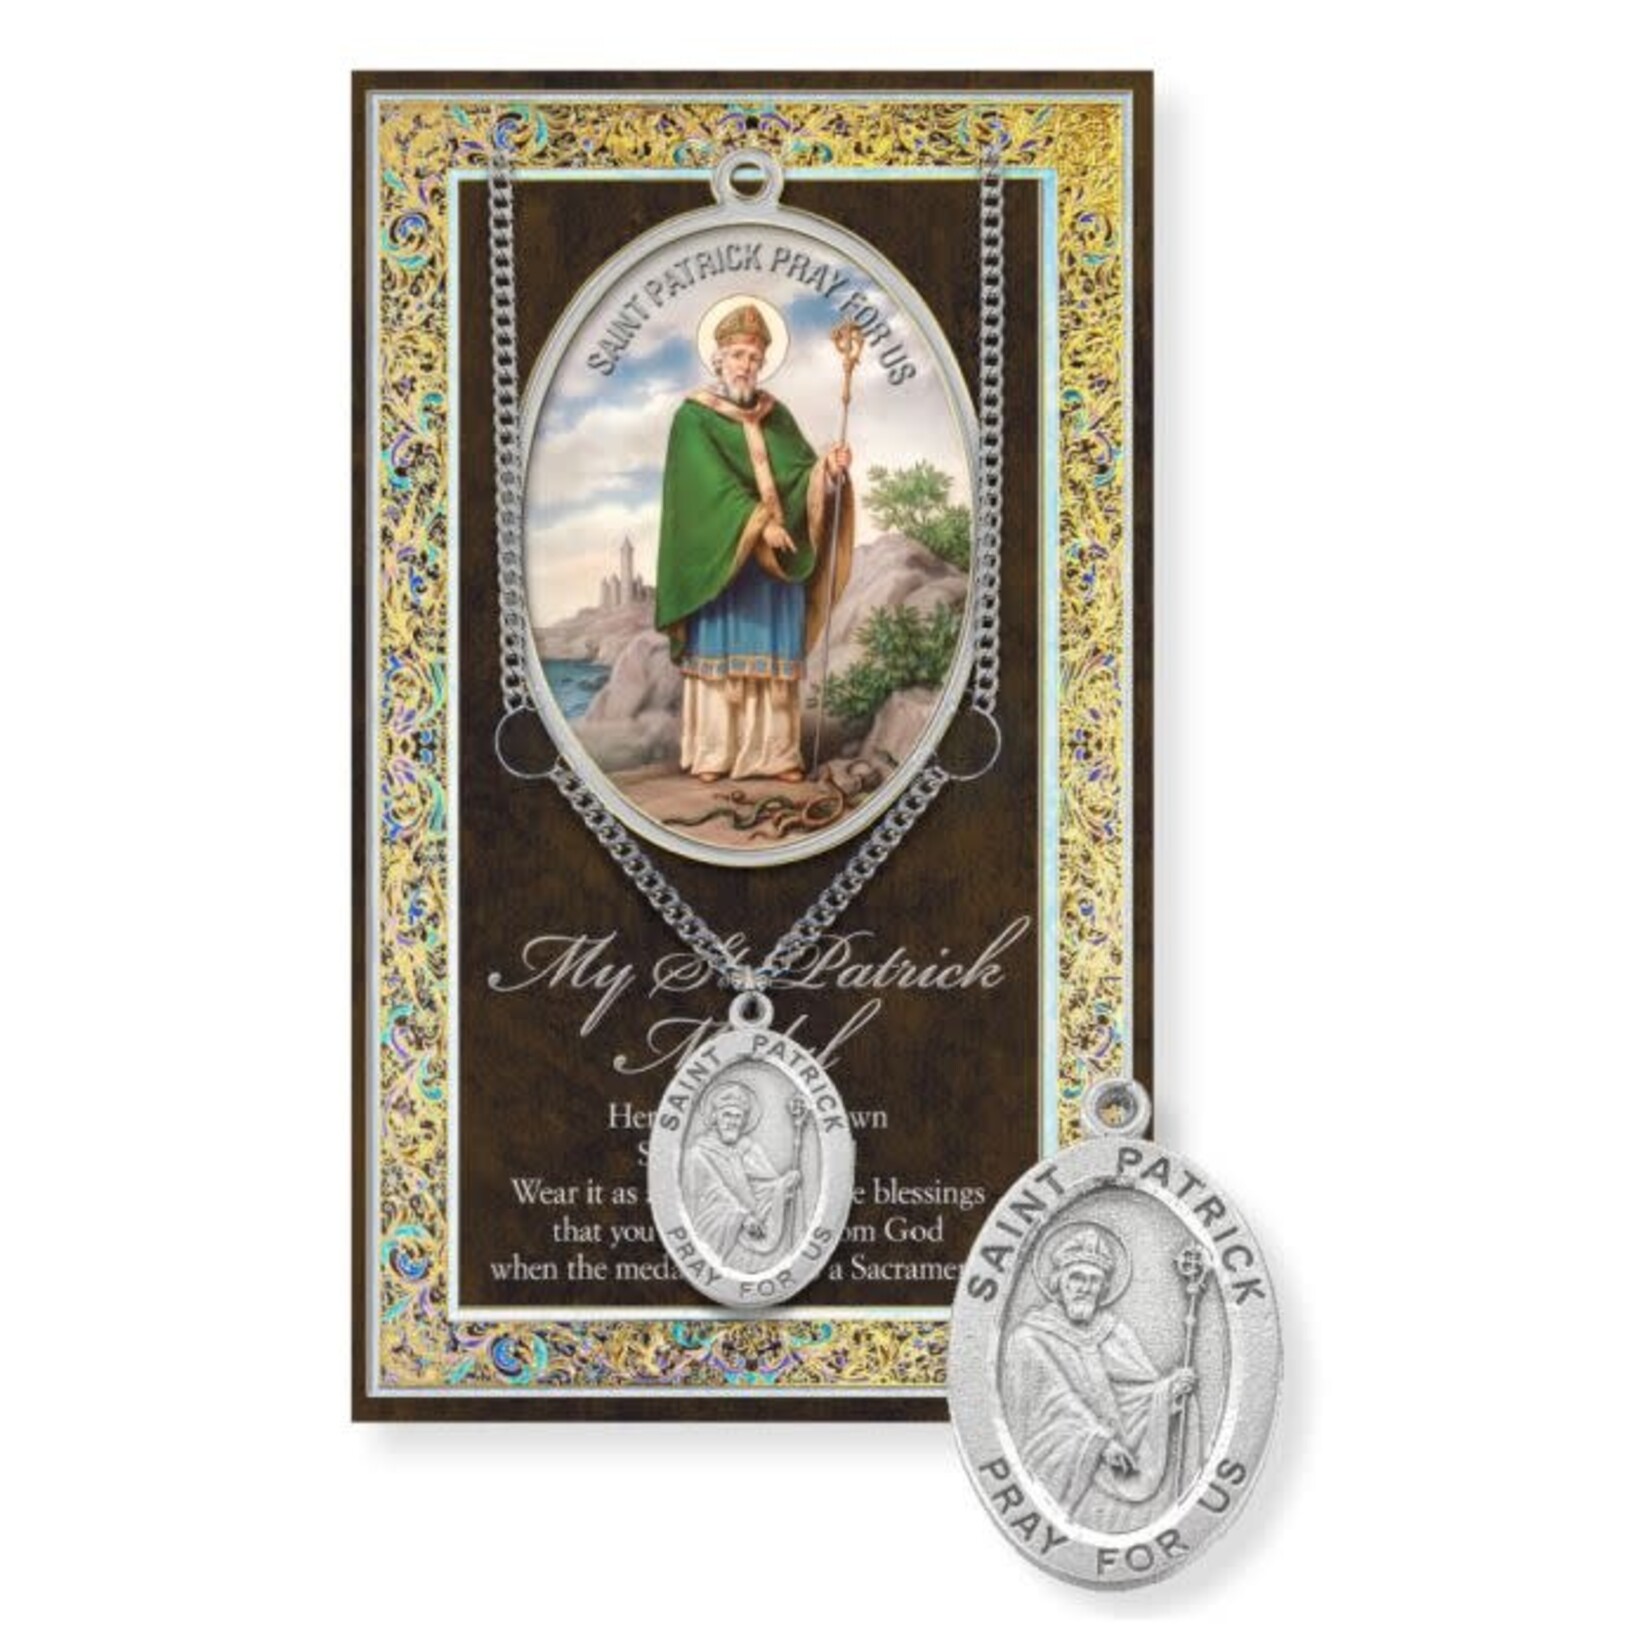 Saint Patrick Pewter Medal and Prayer Card Set